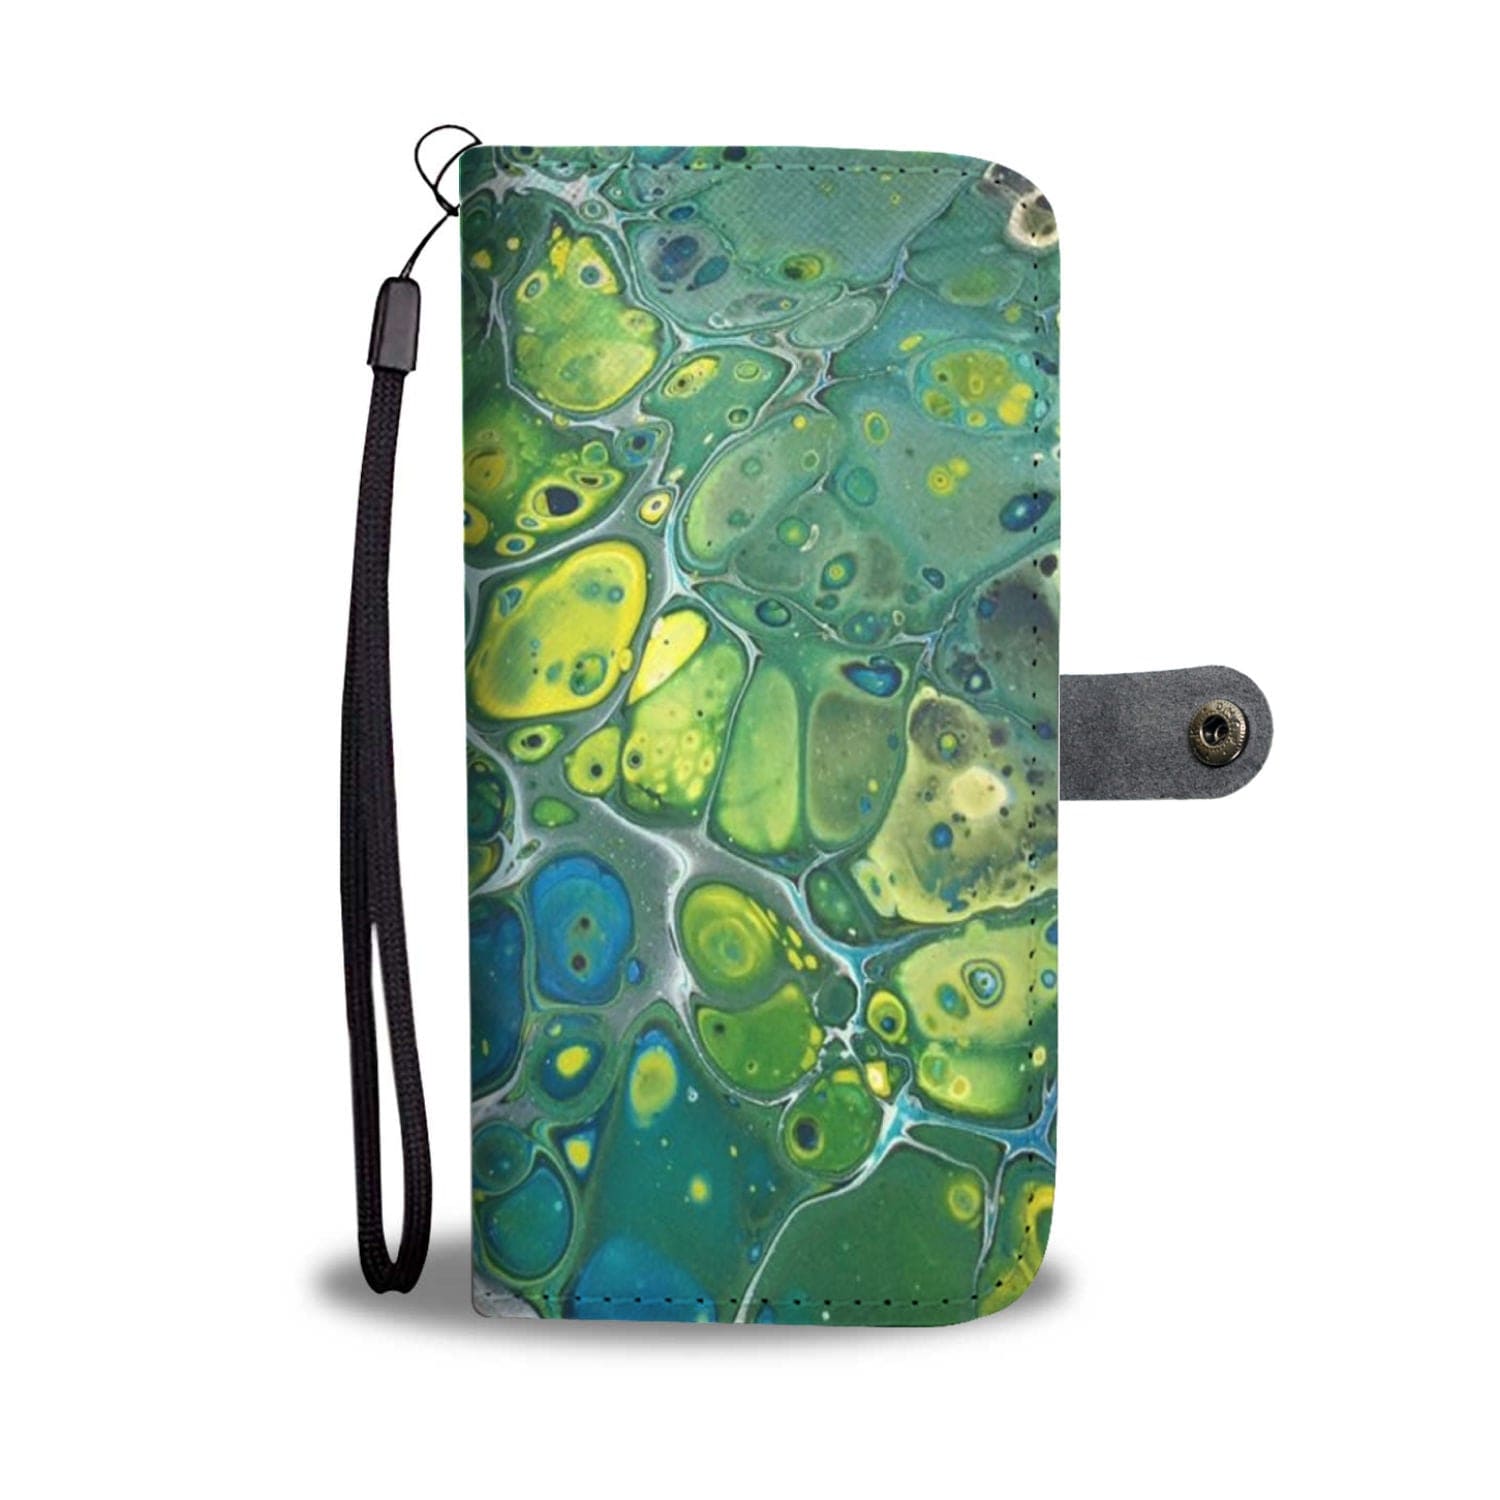 wc-fulfillment Wallet Case Lily Pad original art - Phone Wallet